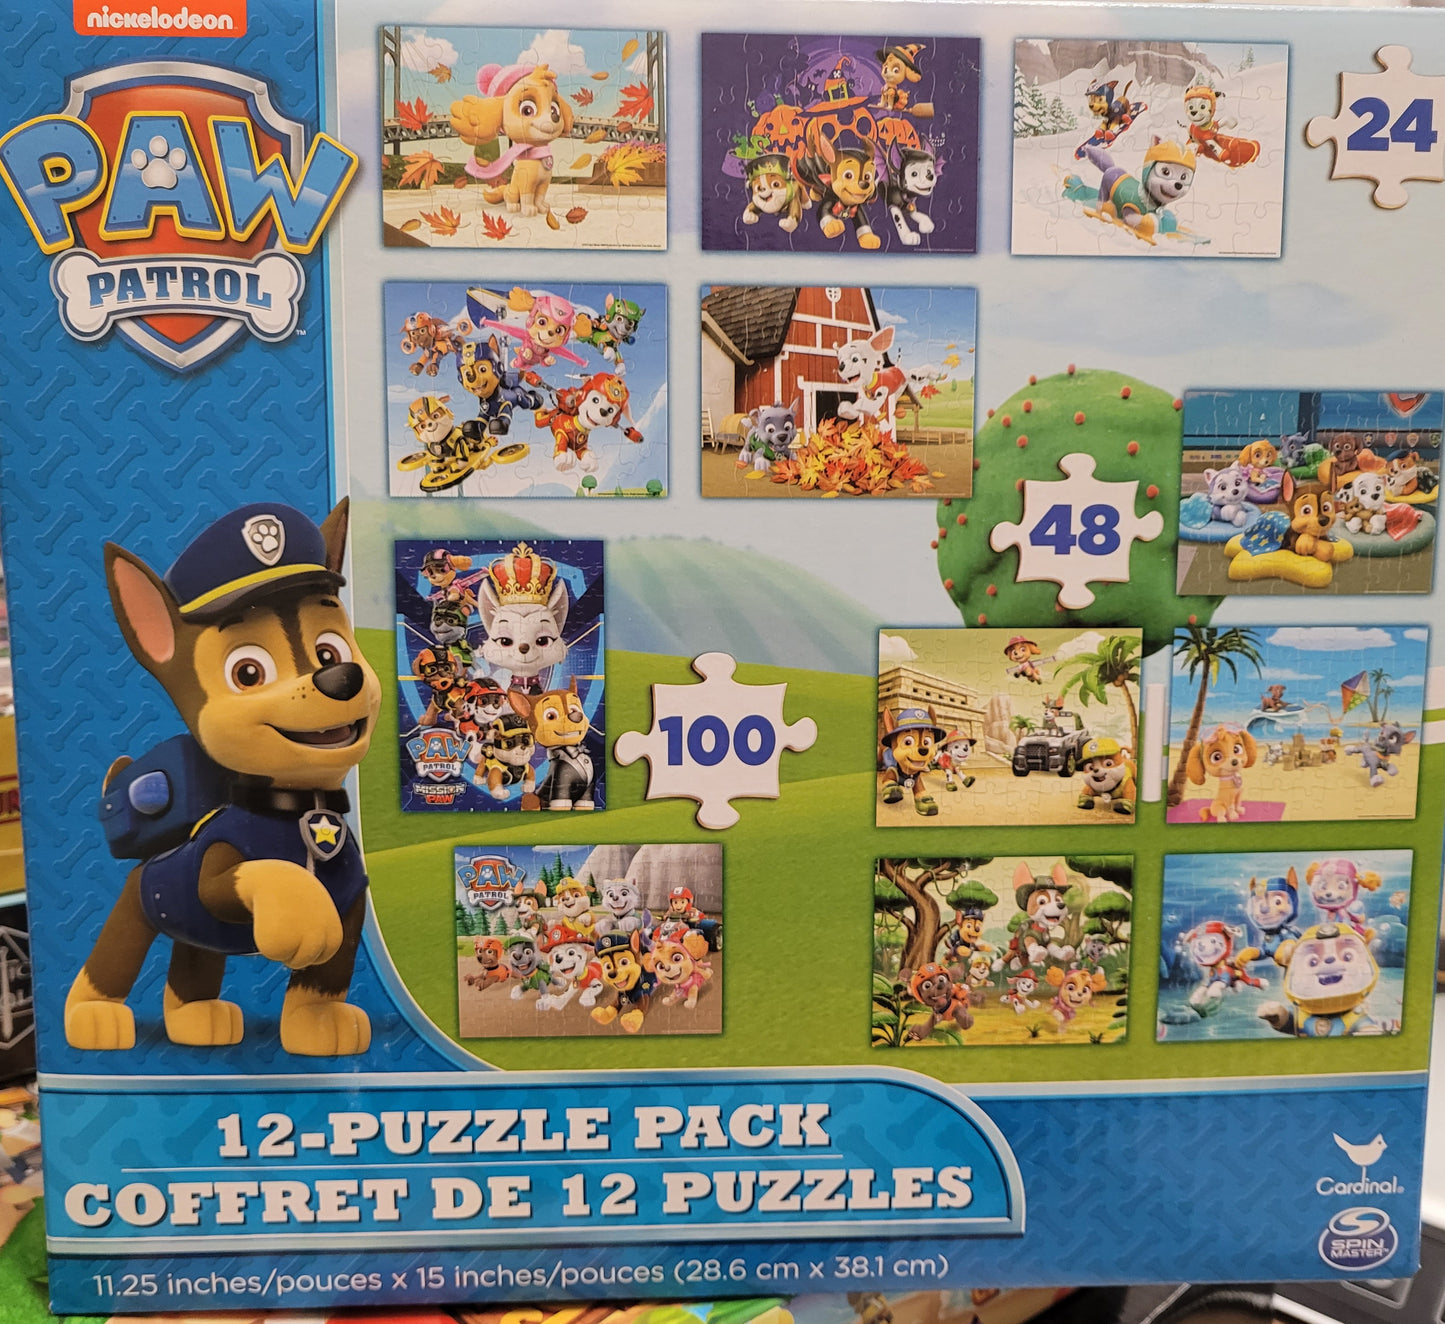 12- Puzzle Pack - Paw Patrol